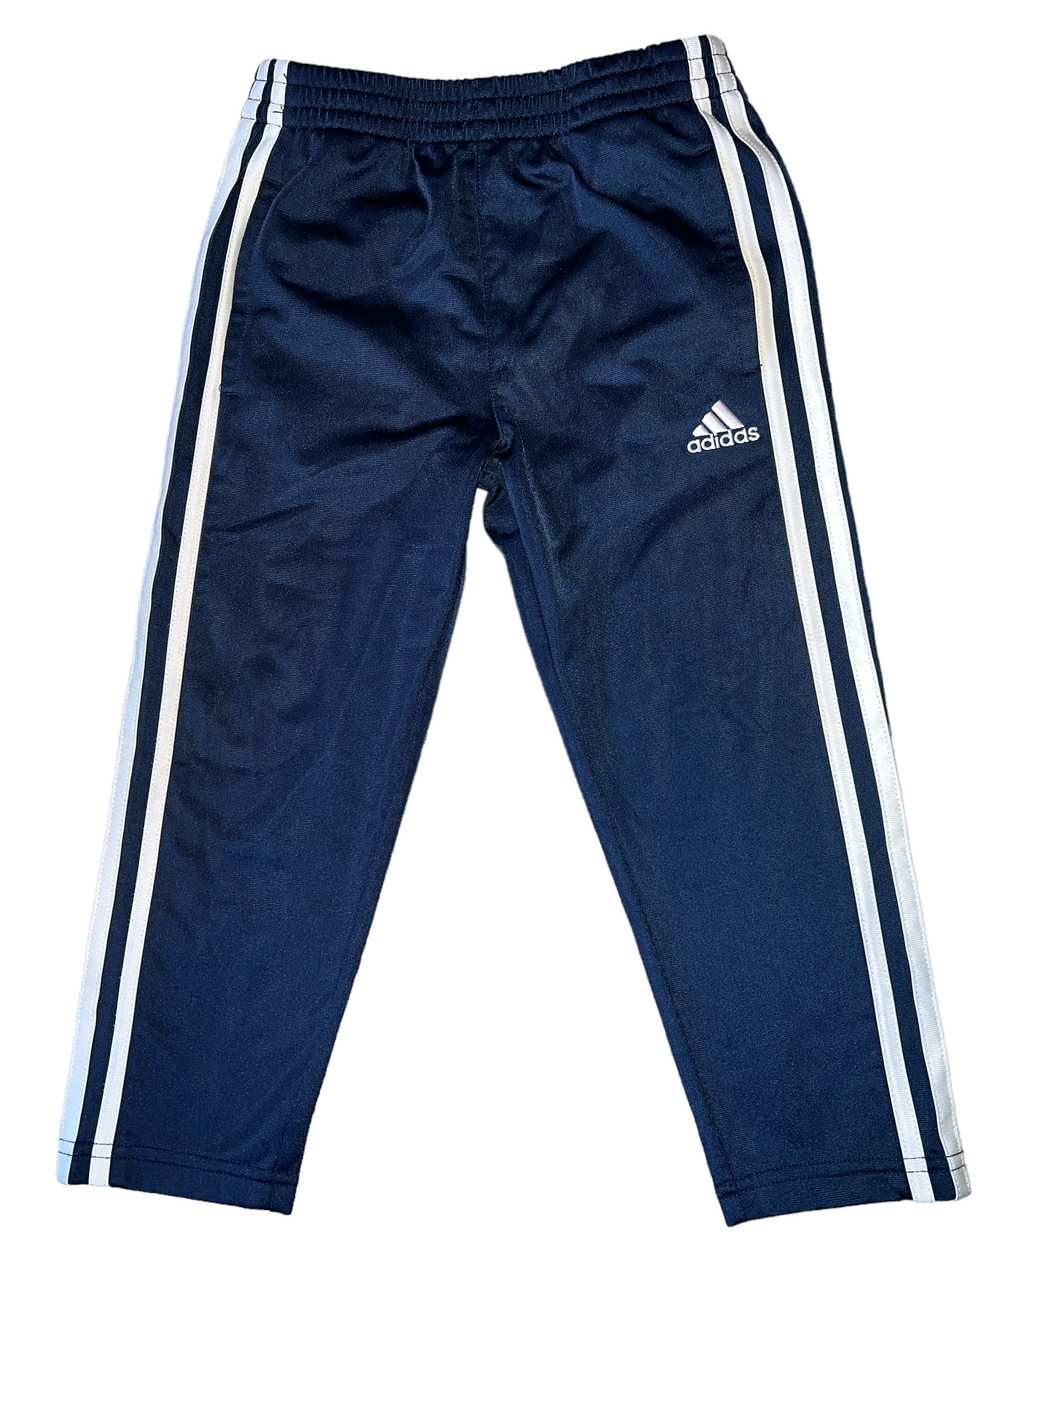 Adidas boys classic stripe training pant 4T